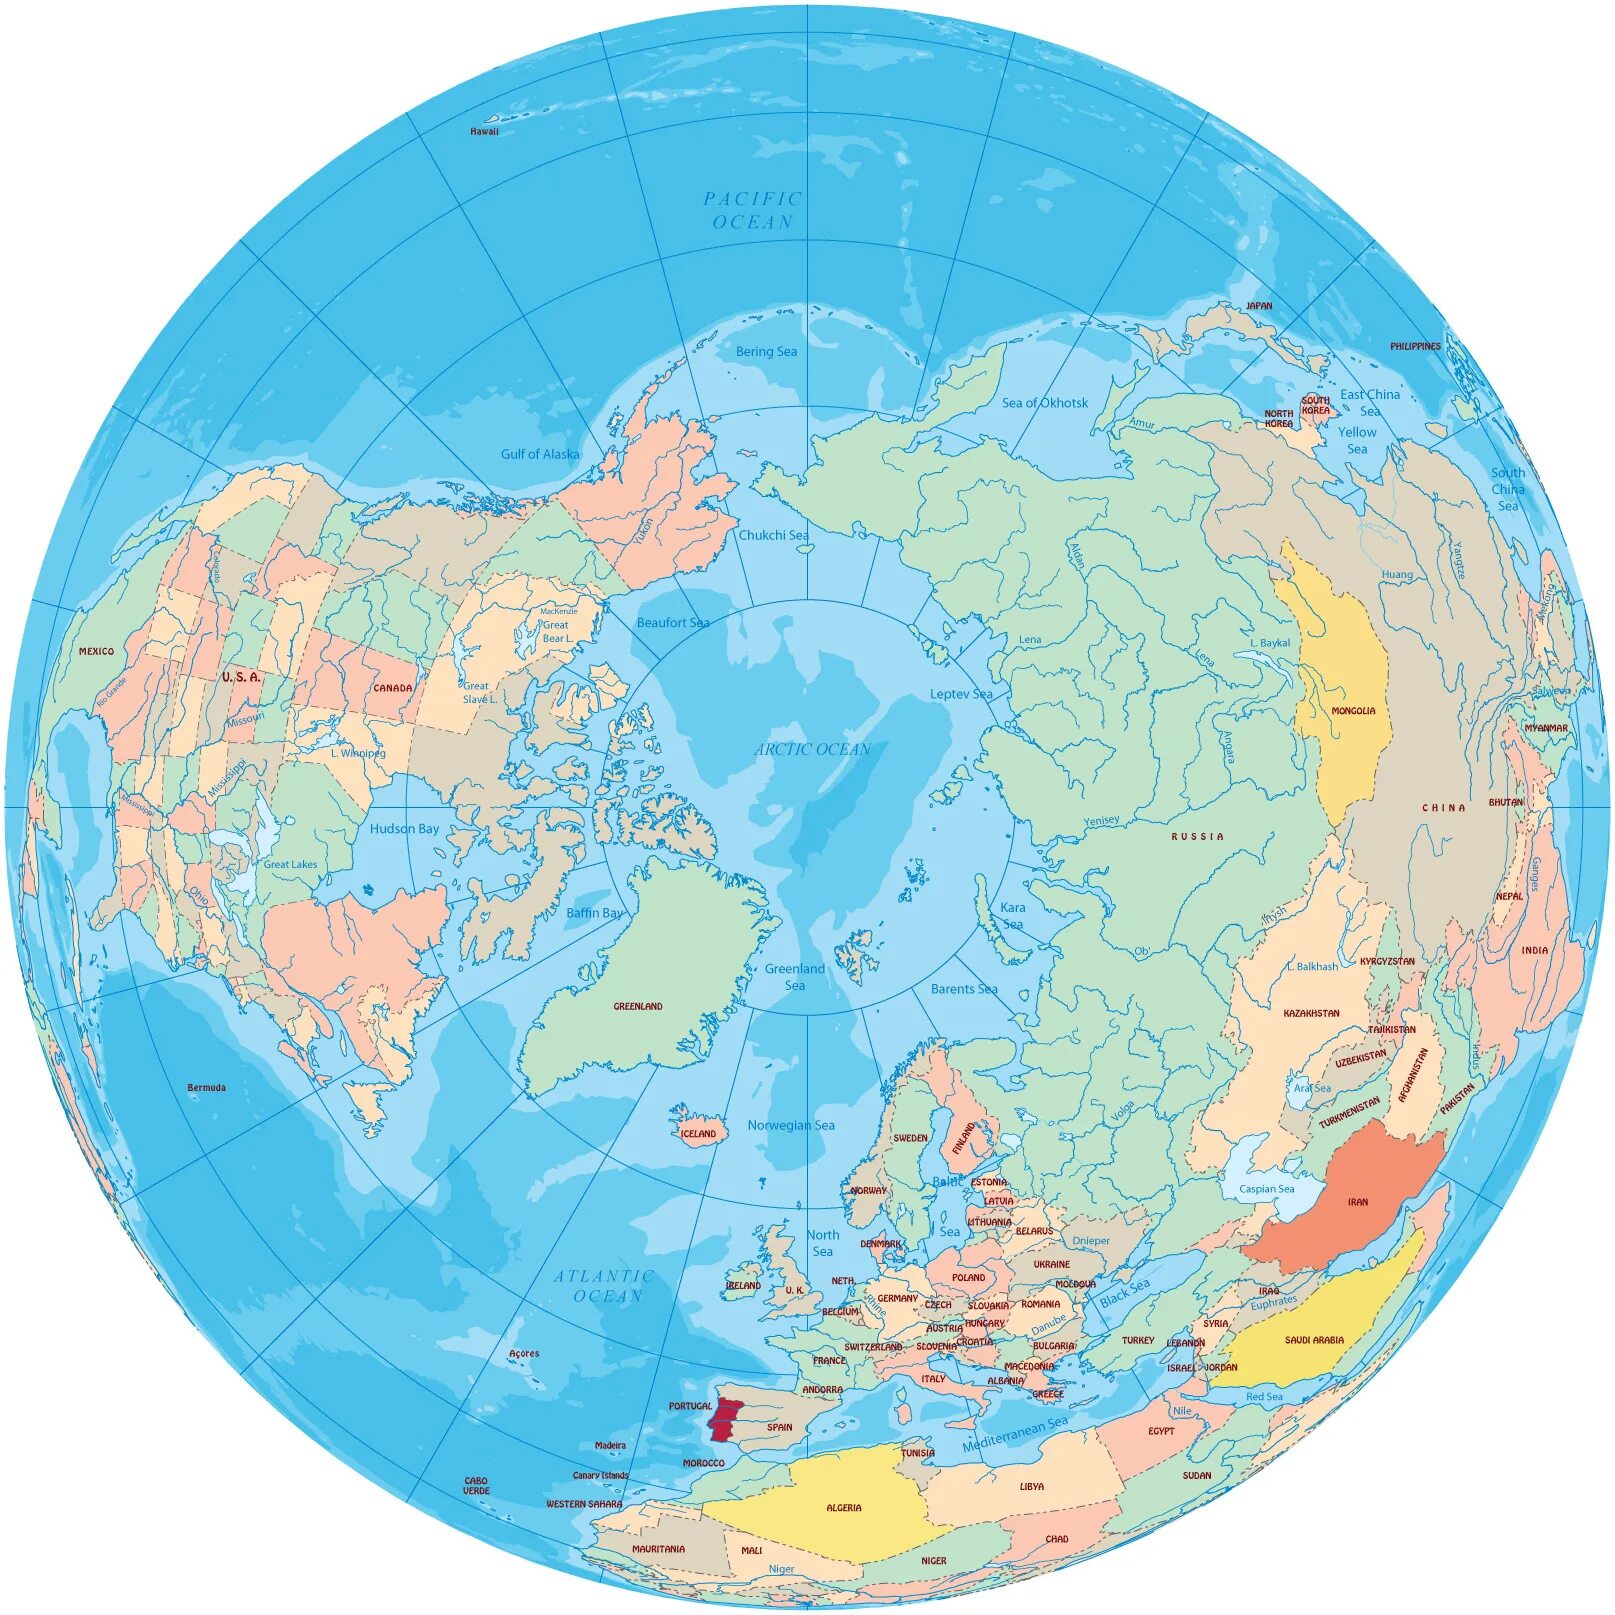 Атлас северного полушария. Карта Северного полушария земли. Карта Северного полушария земли со странами. Географическая карта Северного полушария земли.